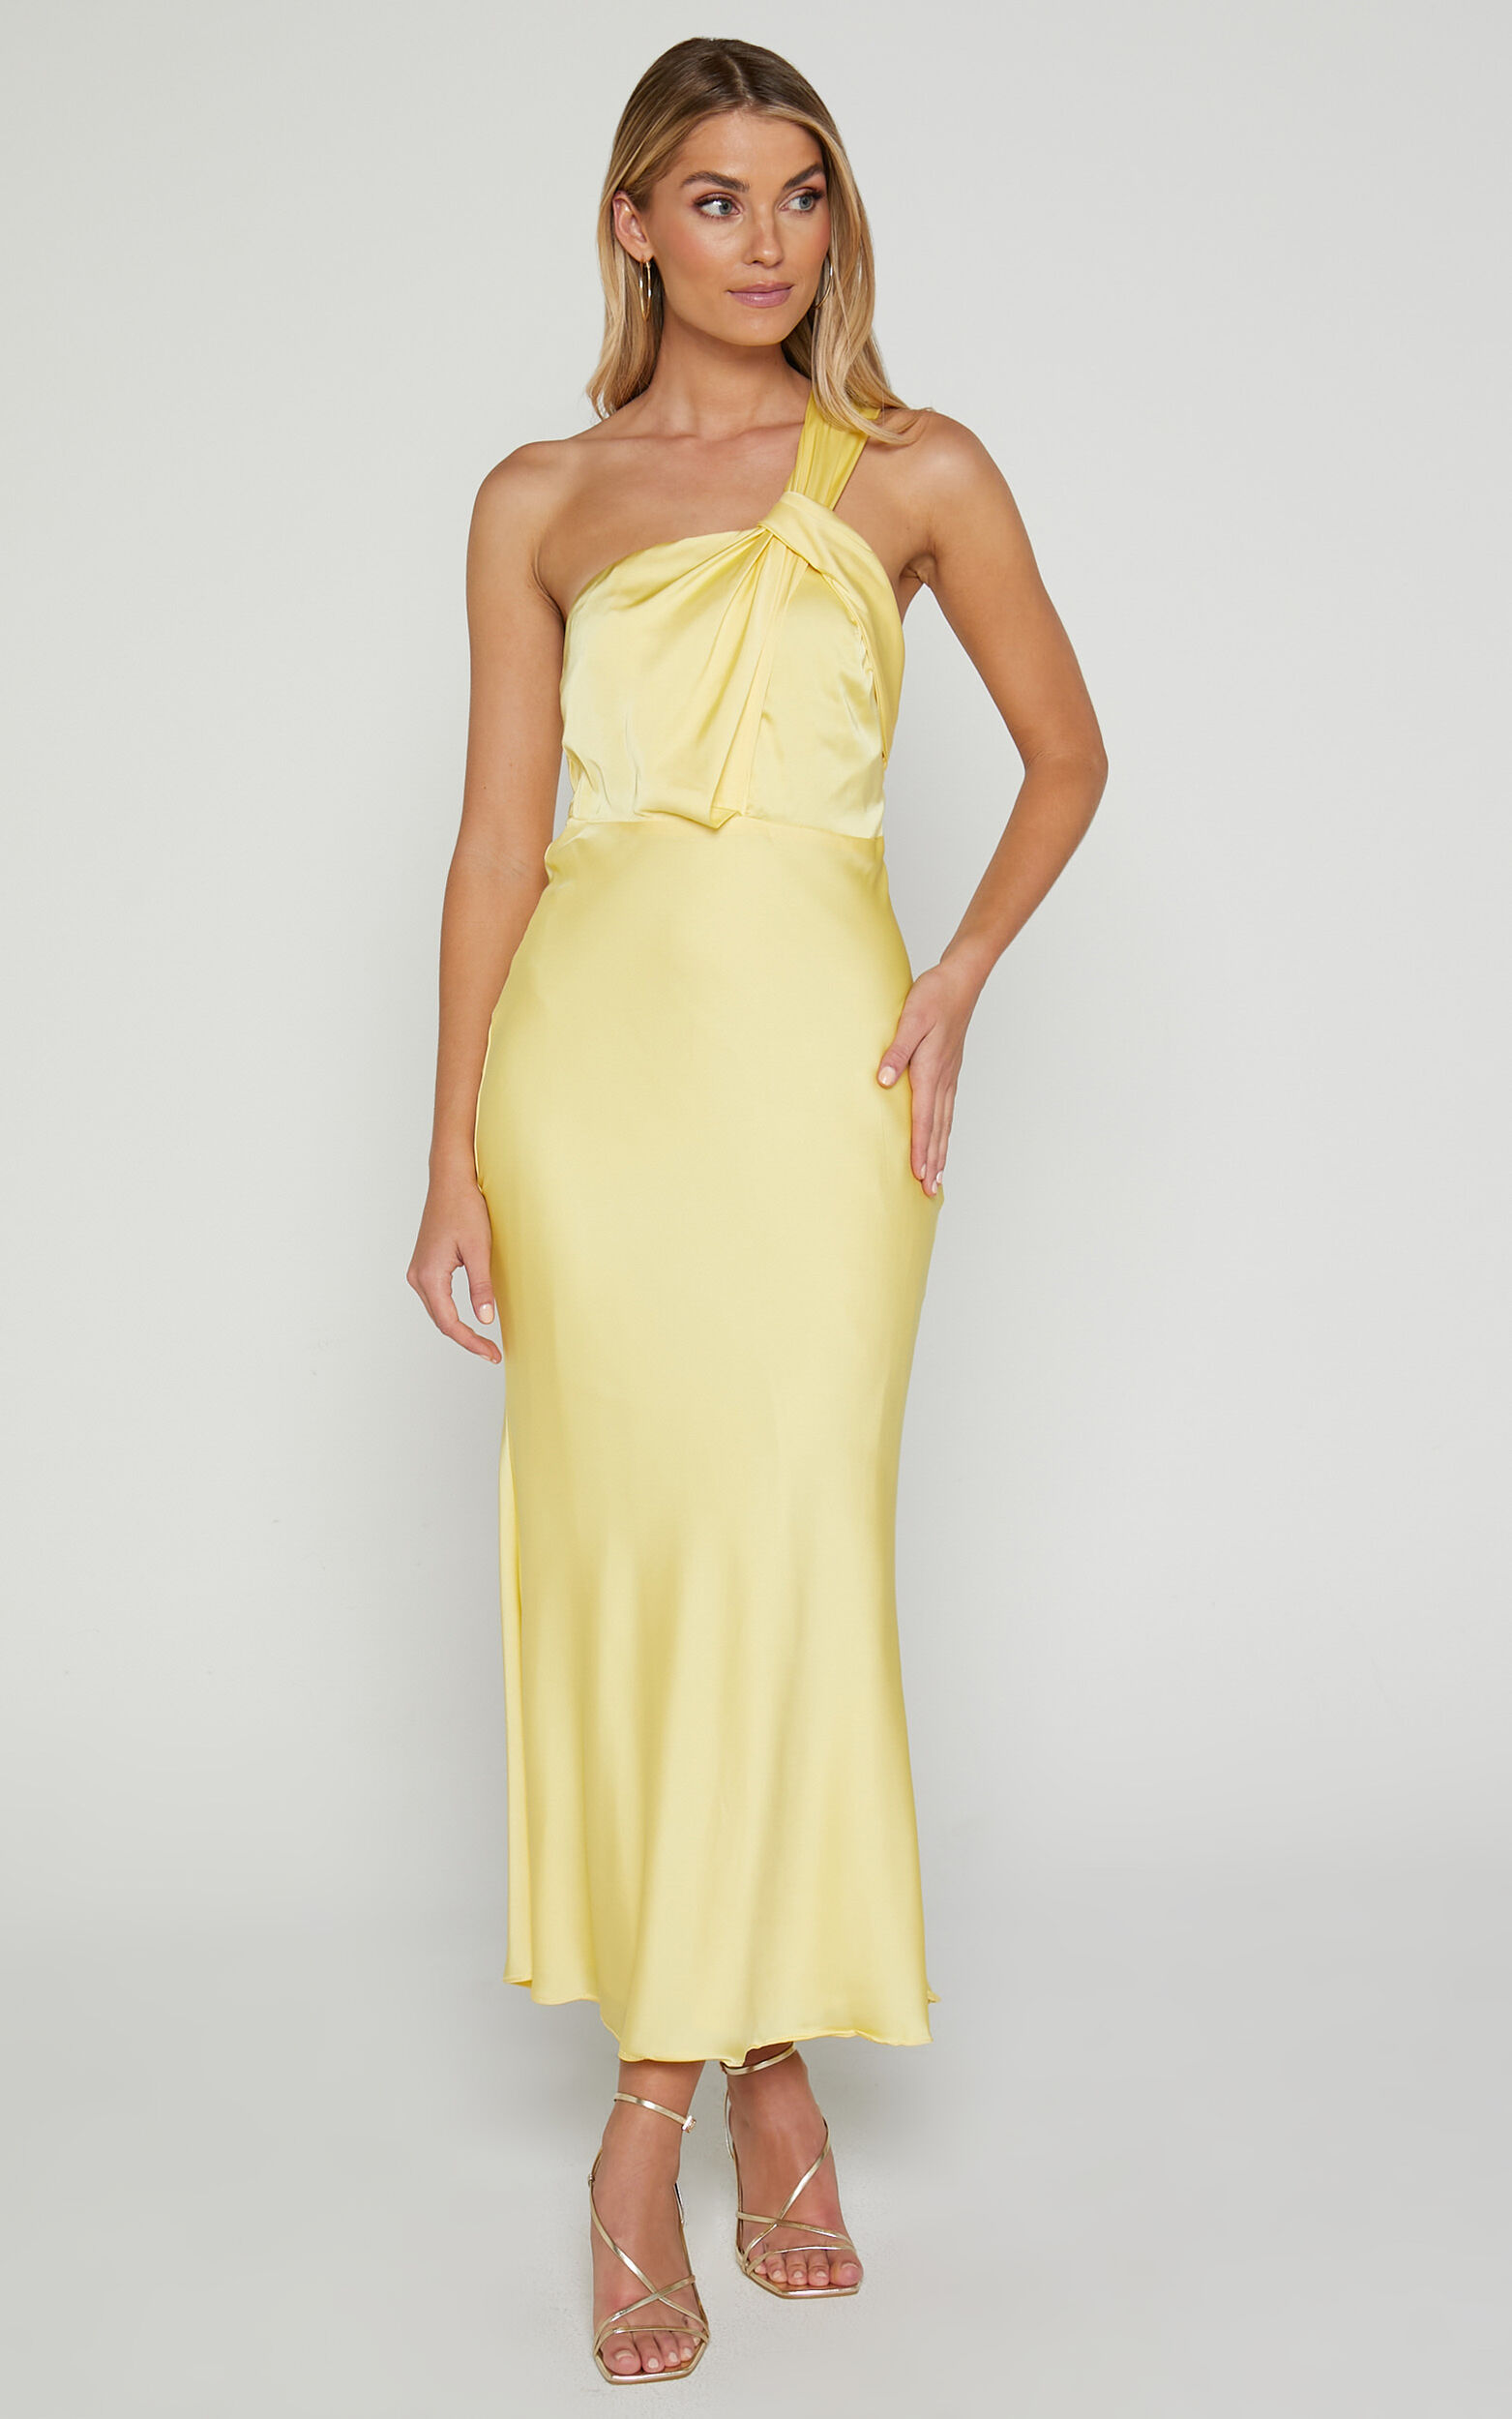 Carmella Midi Dress - One Shoulder Twist Detail Dress in Butter Yellow - 06, YEL1